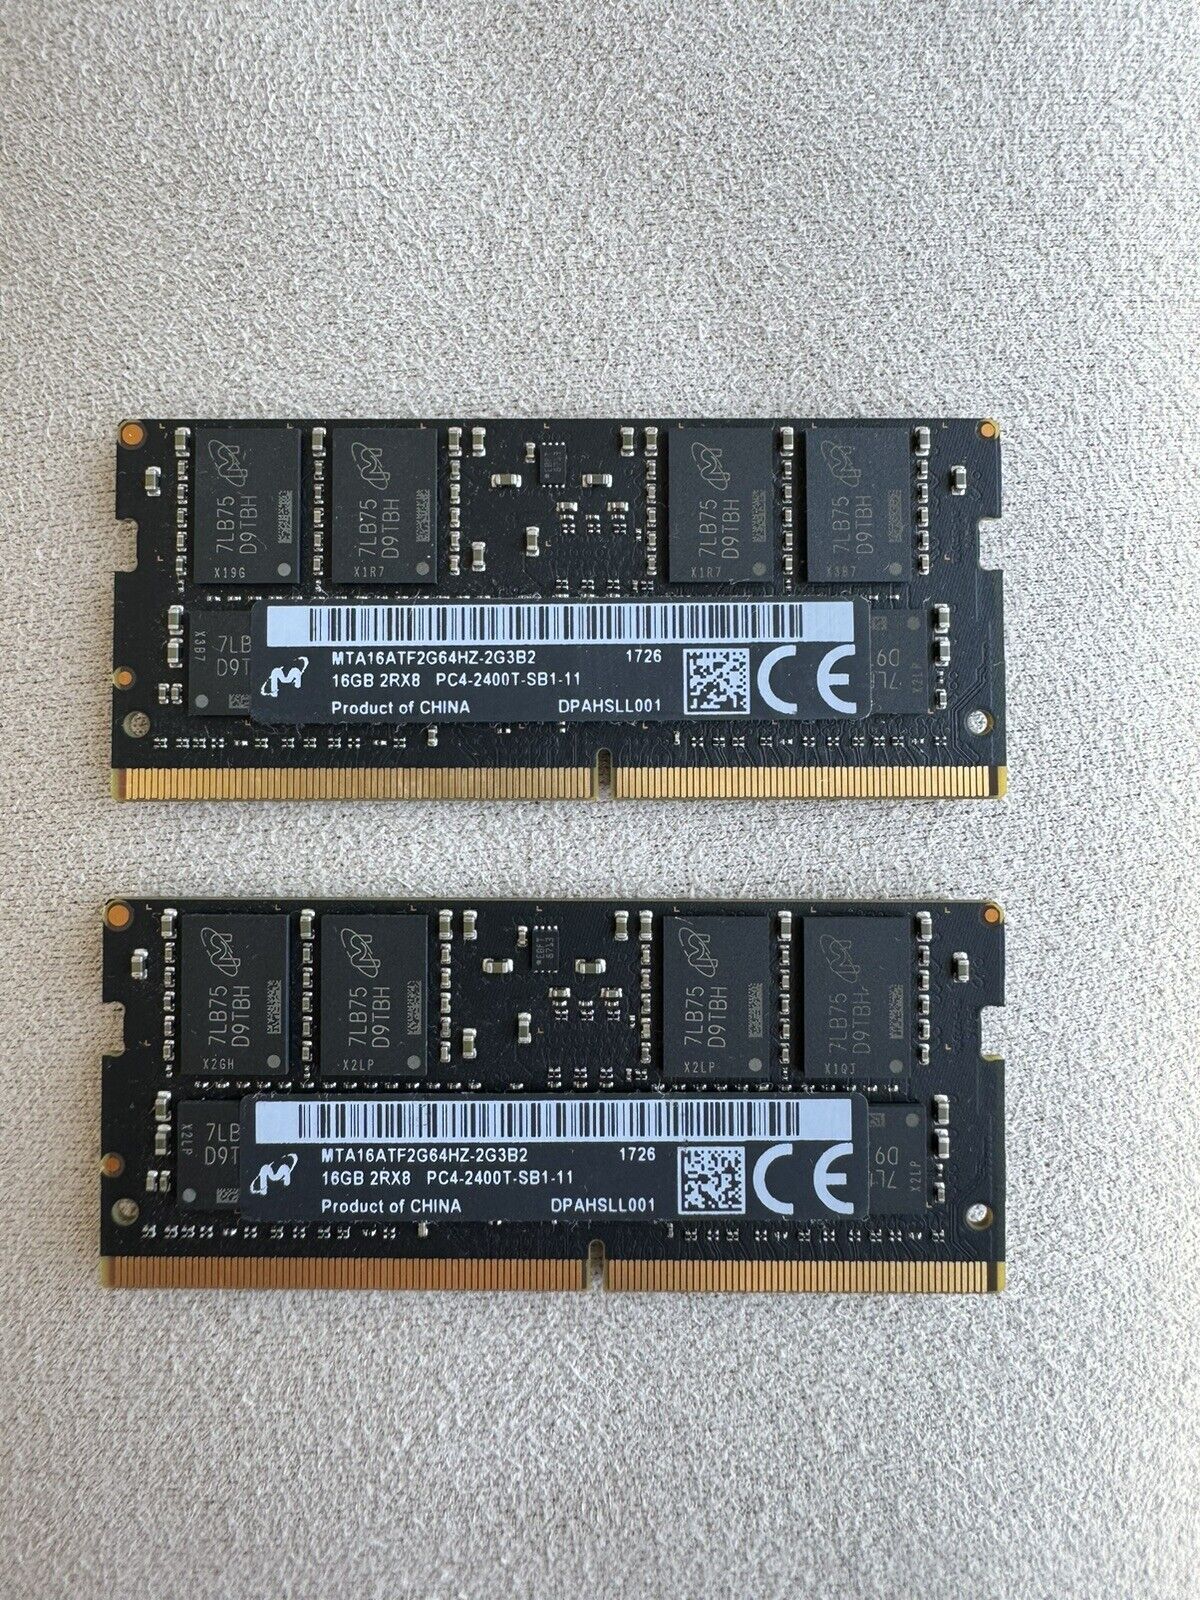 Micron 32gb memory (2 X 16GB) mta16atf2g64hz